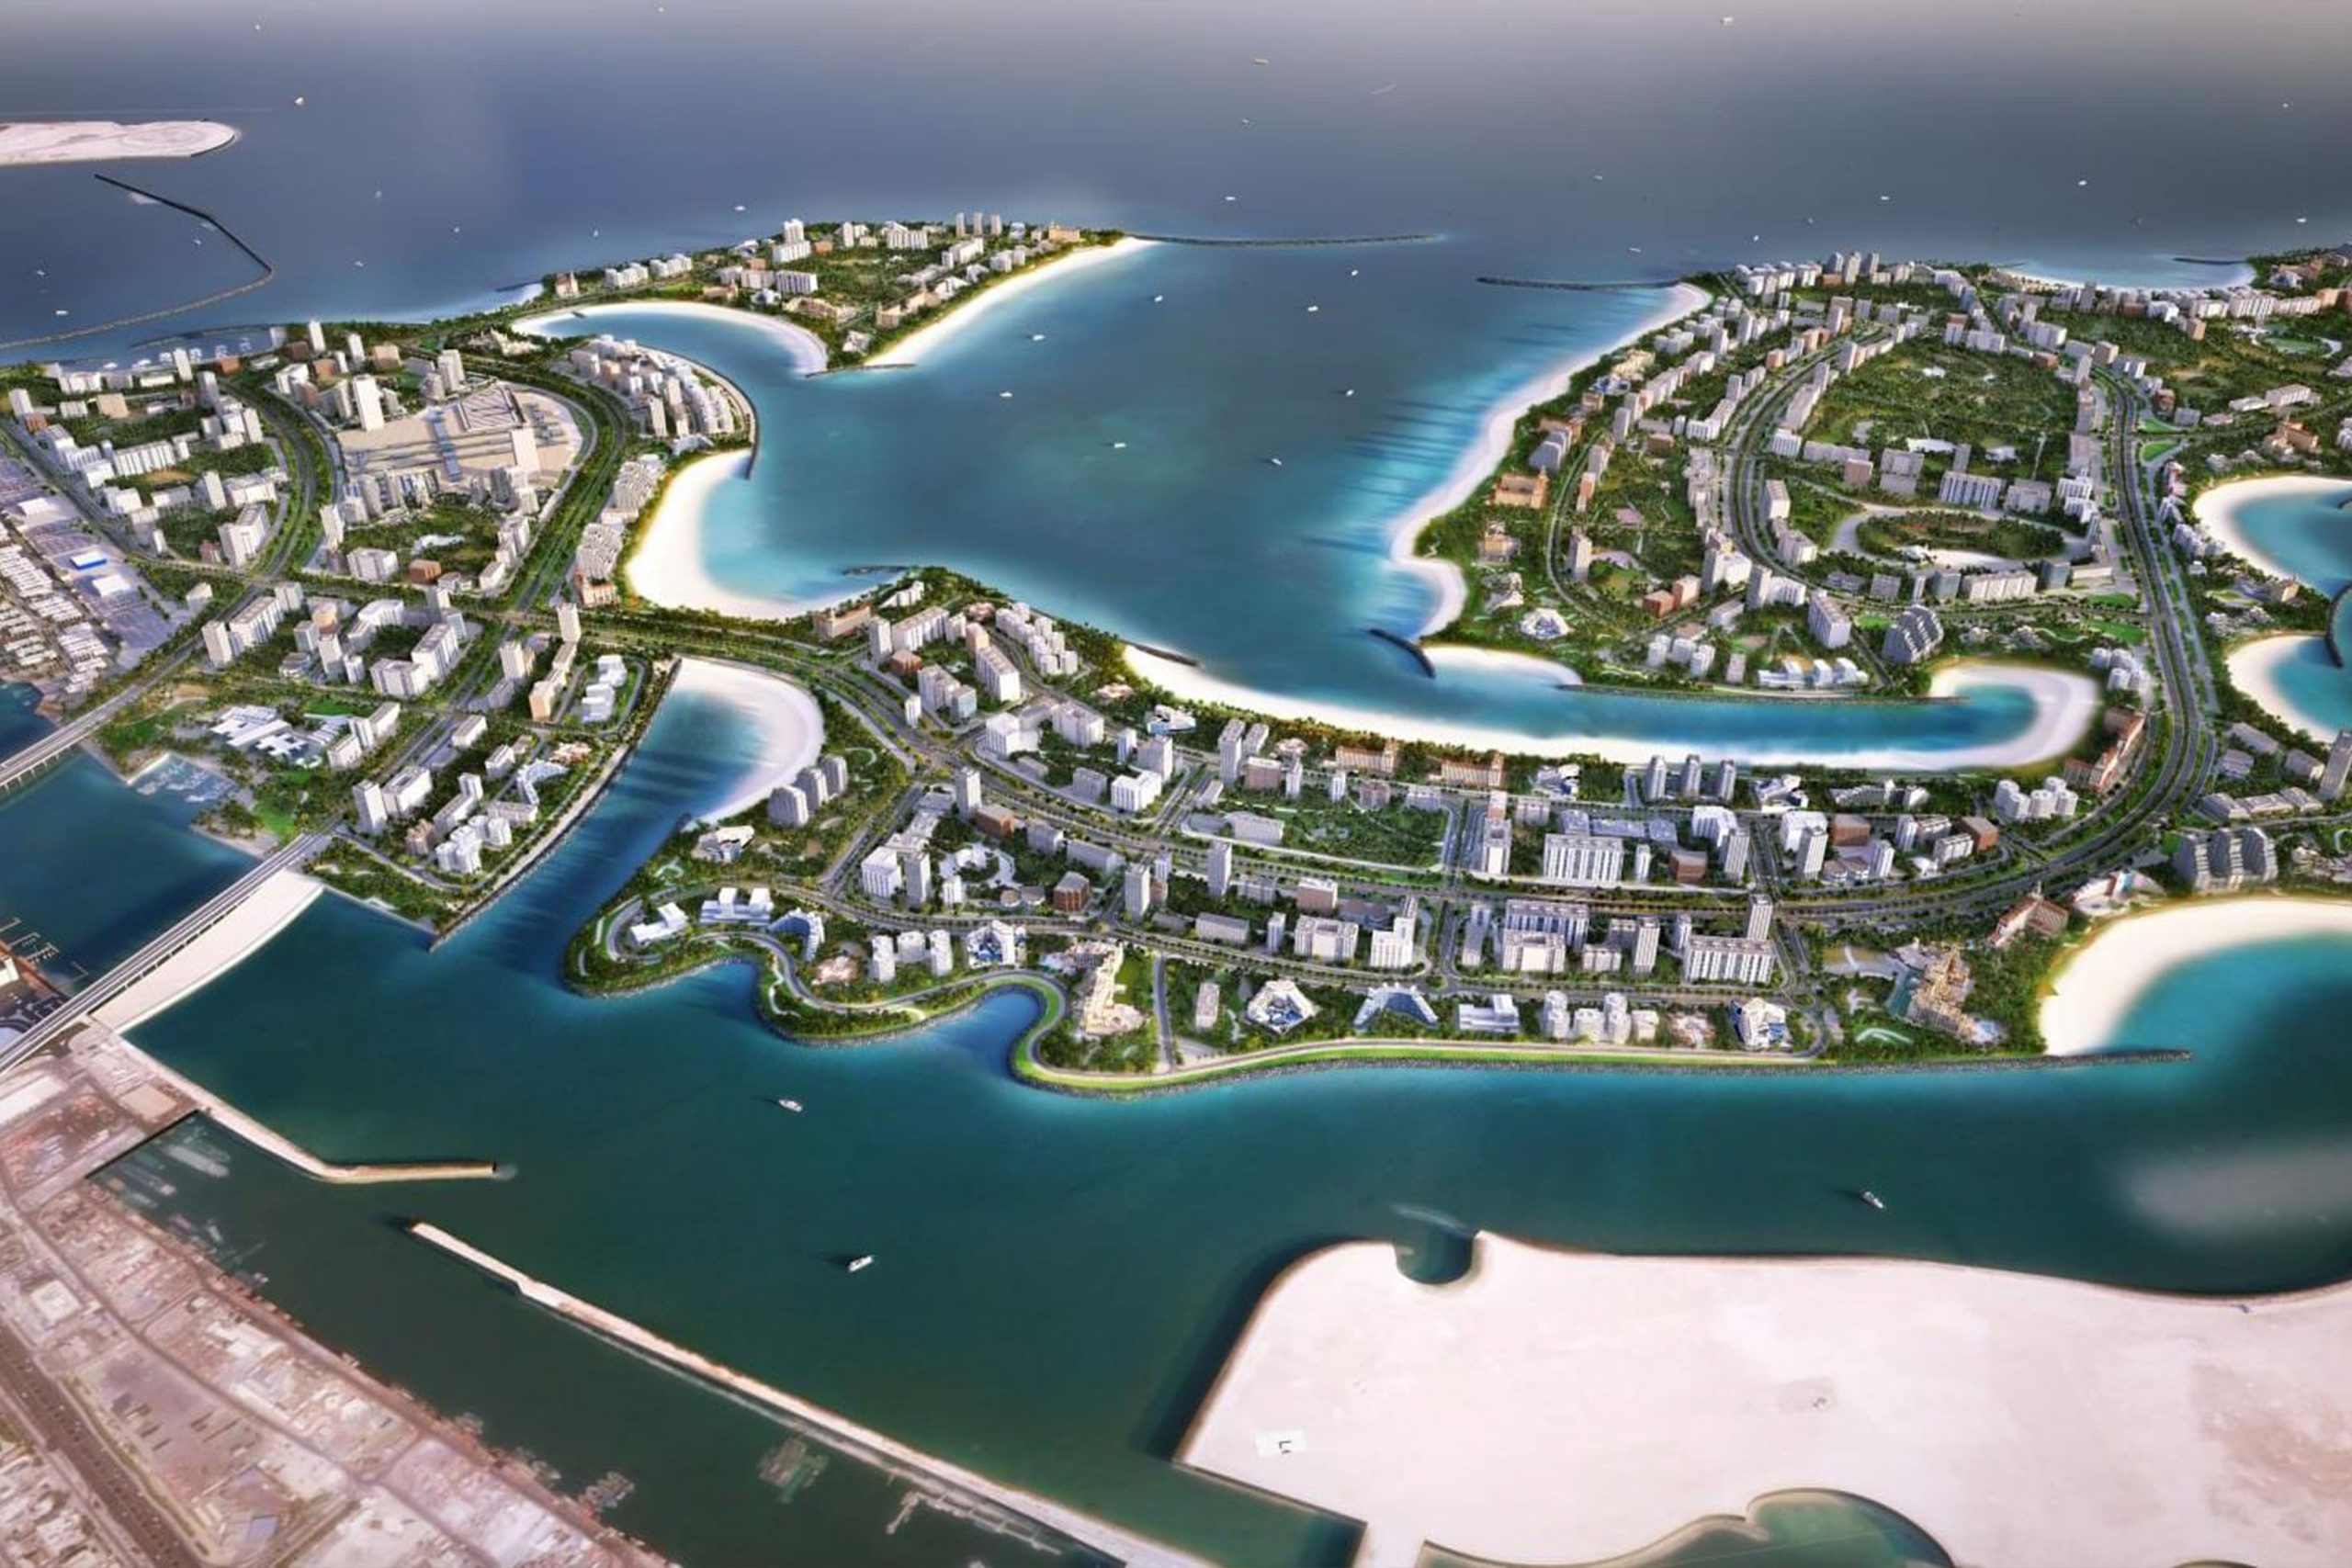 The Dubai Islands Project by Nakheel